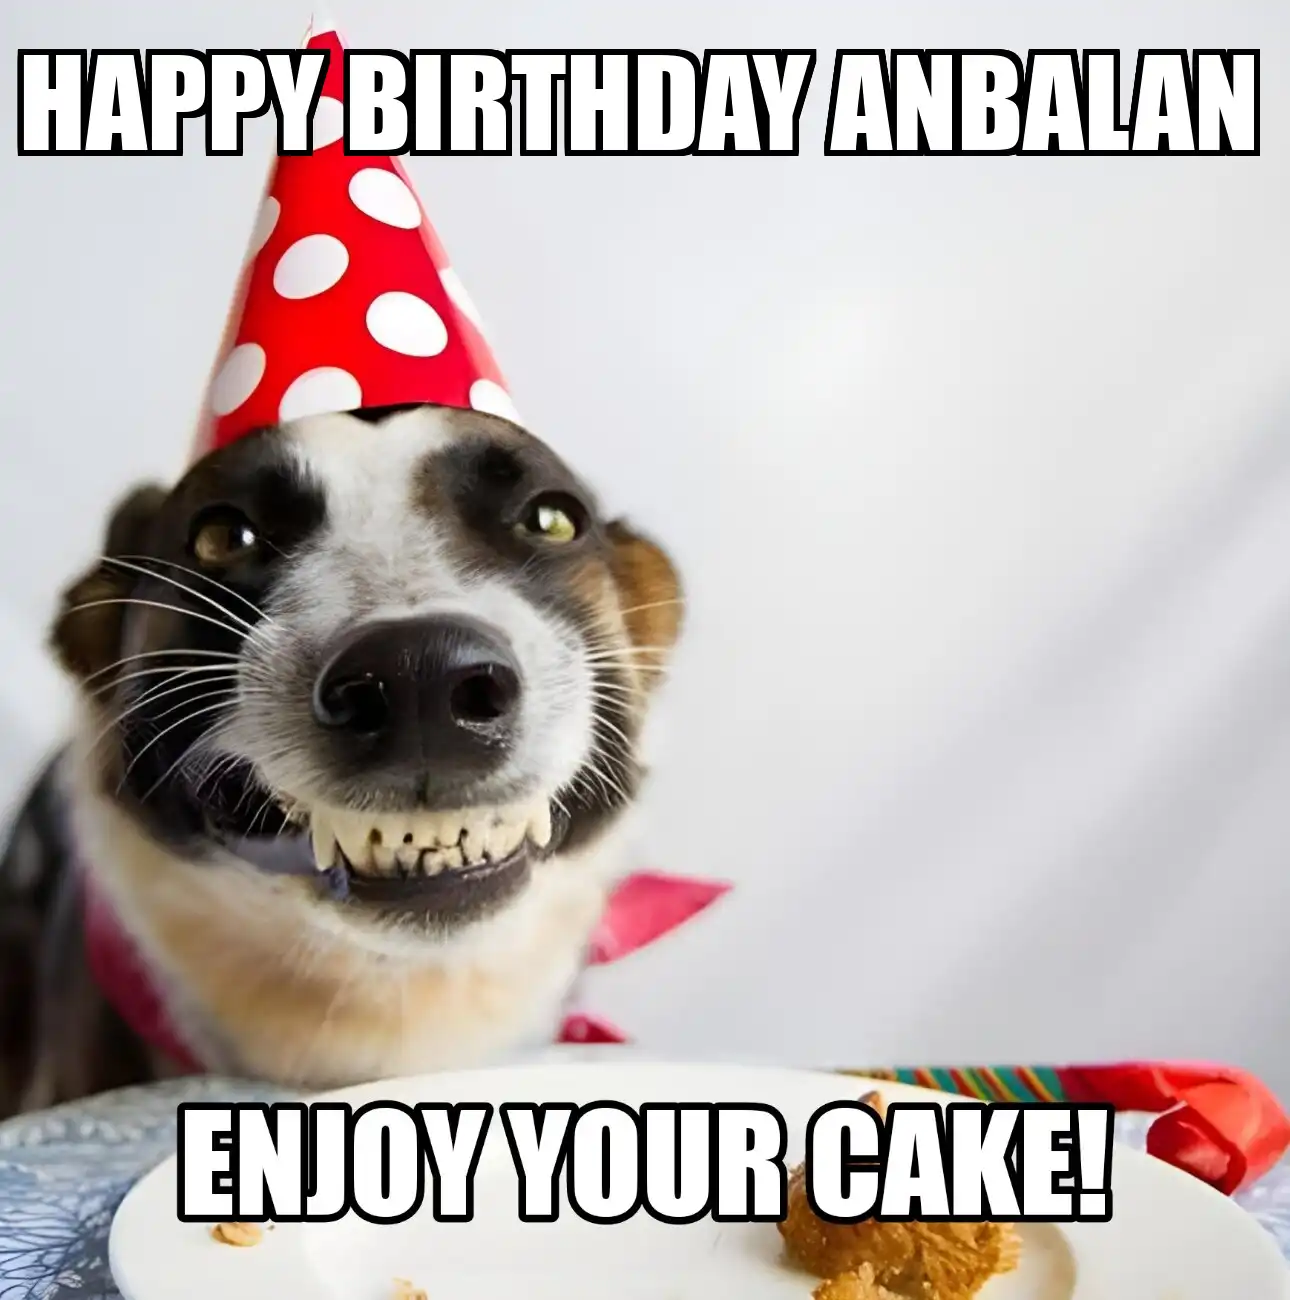 Happy Birthday Anbalan Enjoy Your Cake Dog Meme